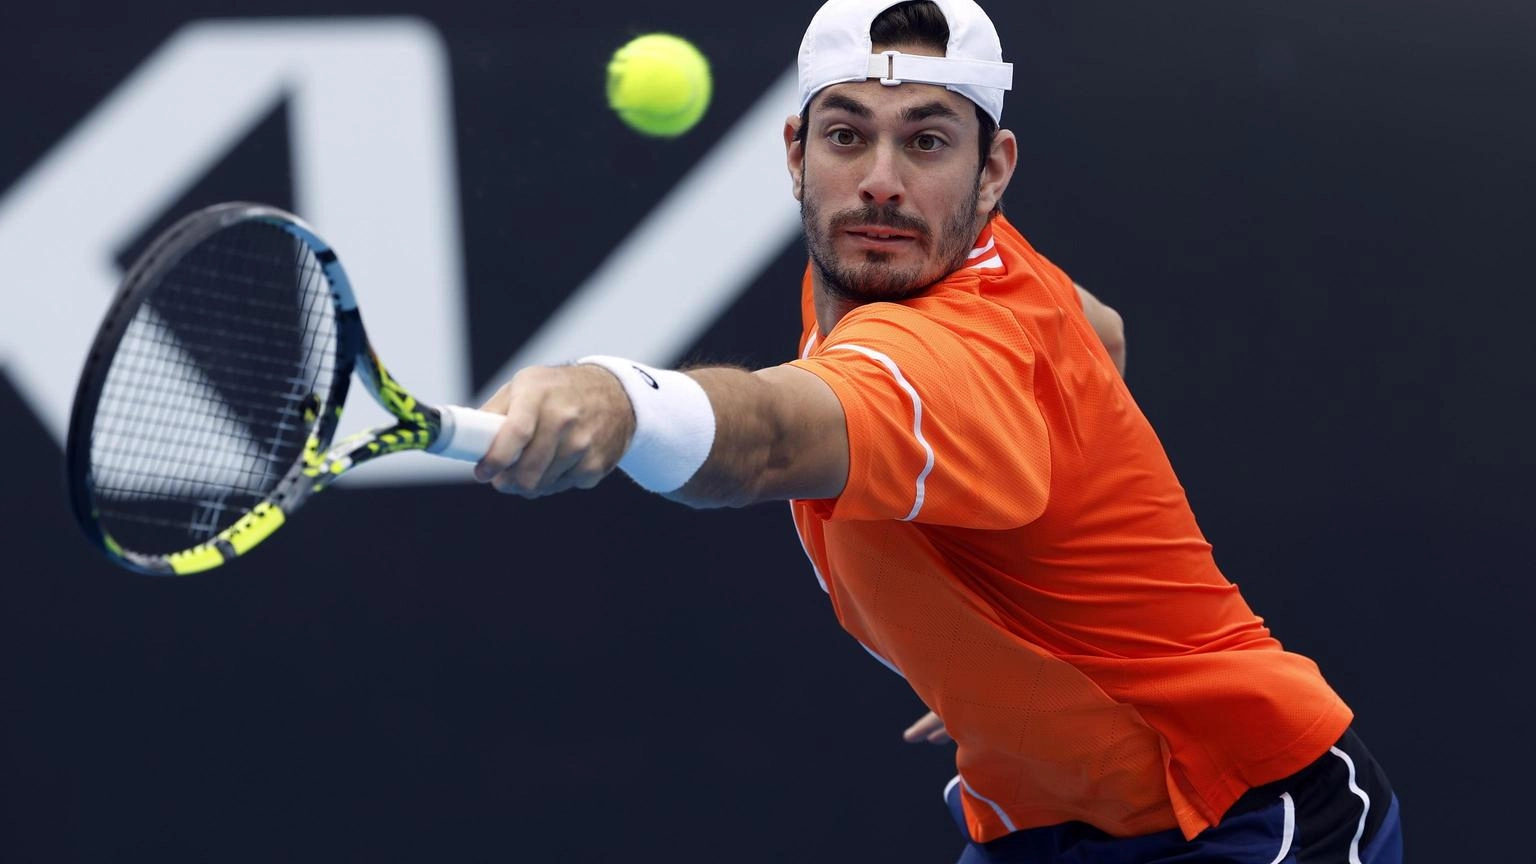 Roland Garros: Zeppieri cede in 5 set a Kokkinakis